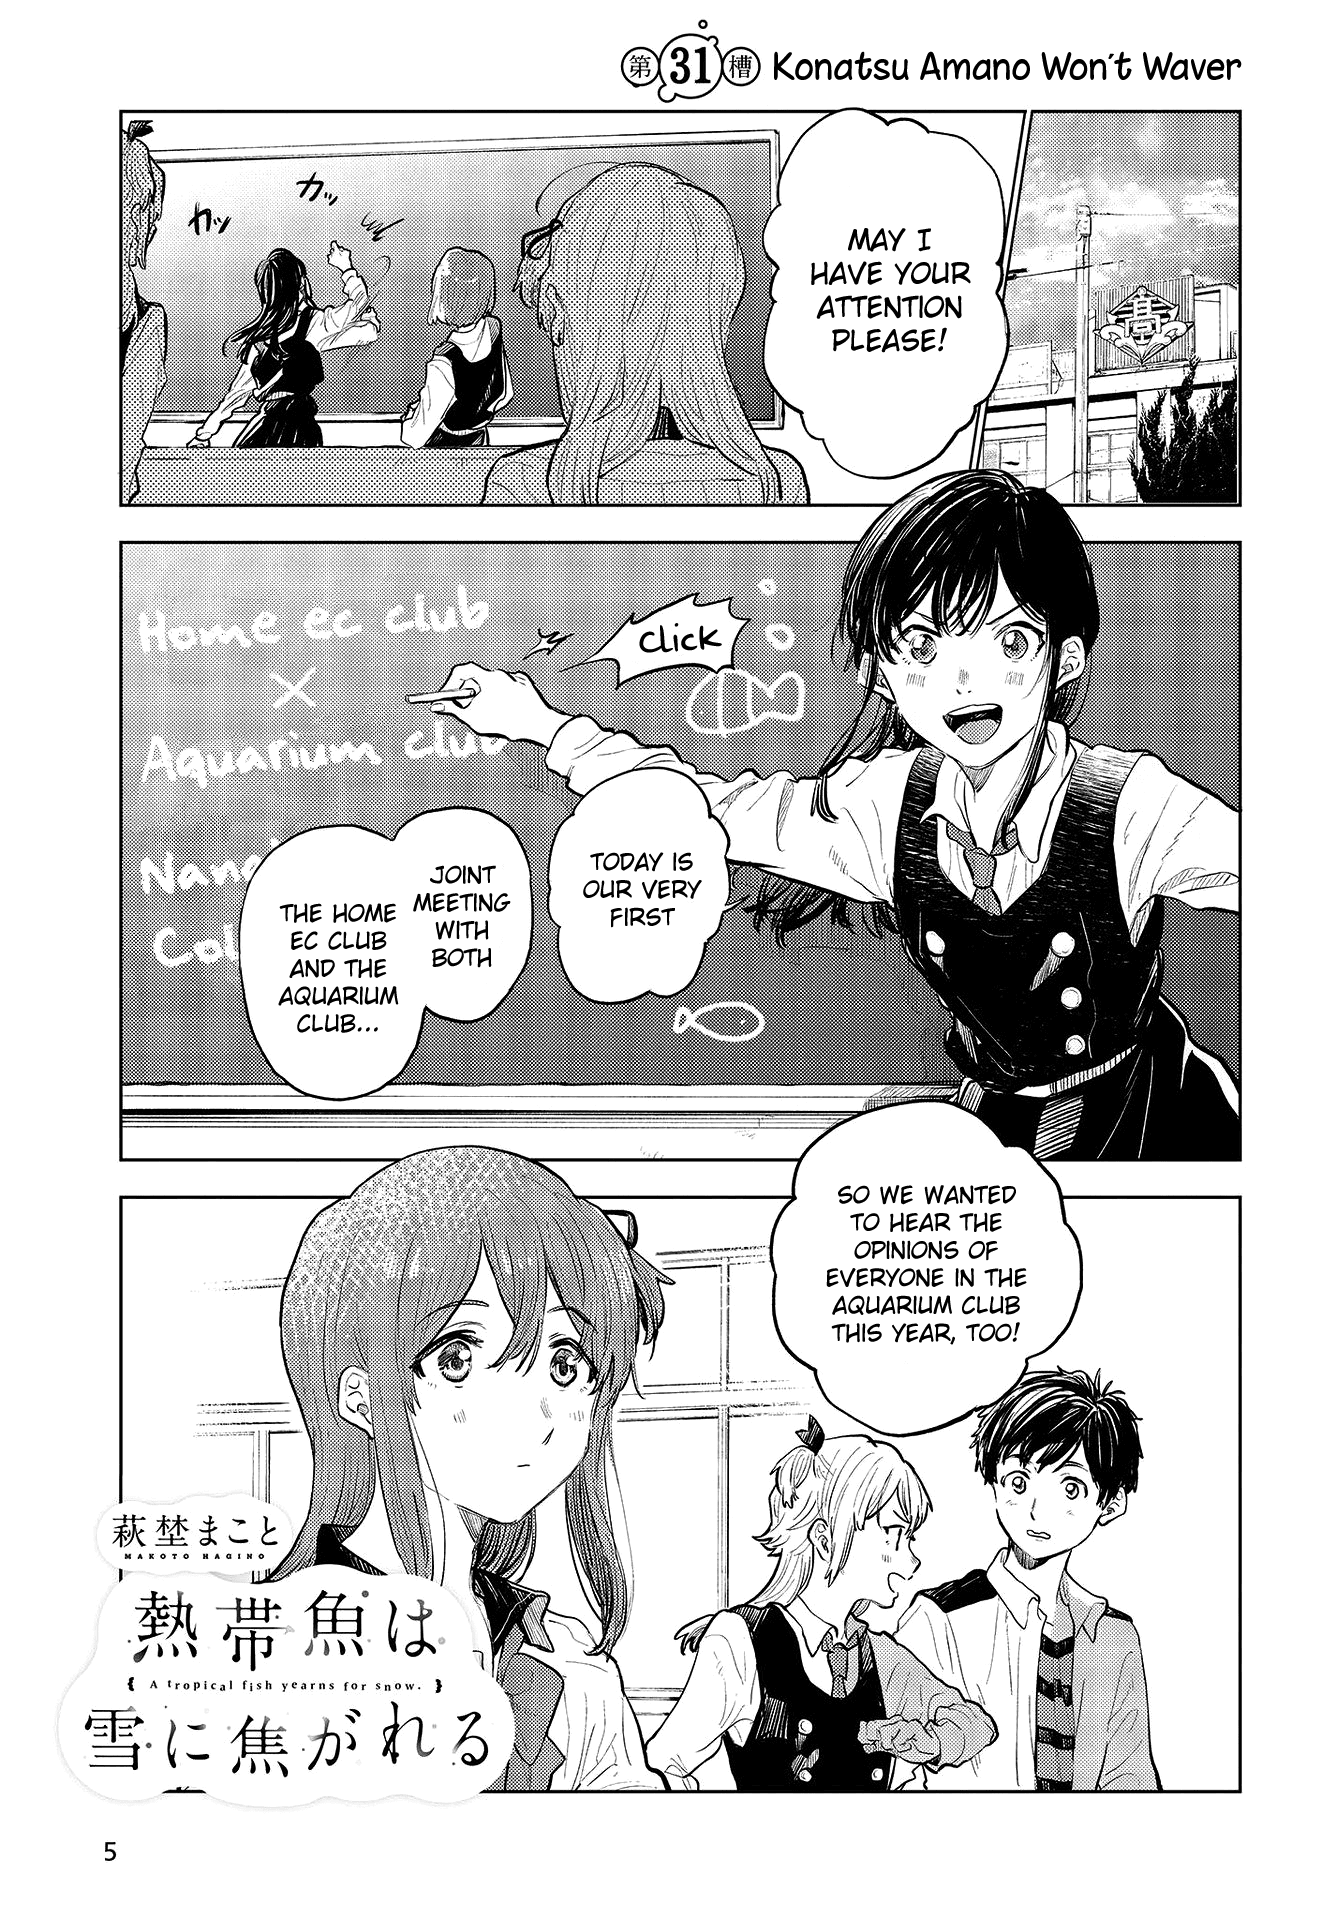 Domestic Girlfriend, Chapter 45 - Domestic Girlfriend Manga Online